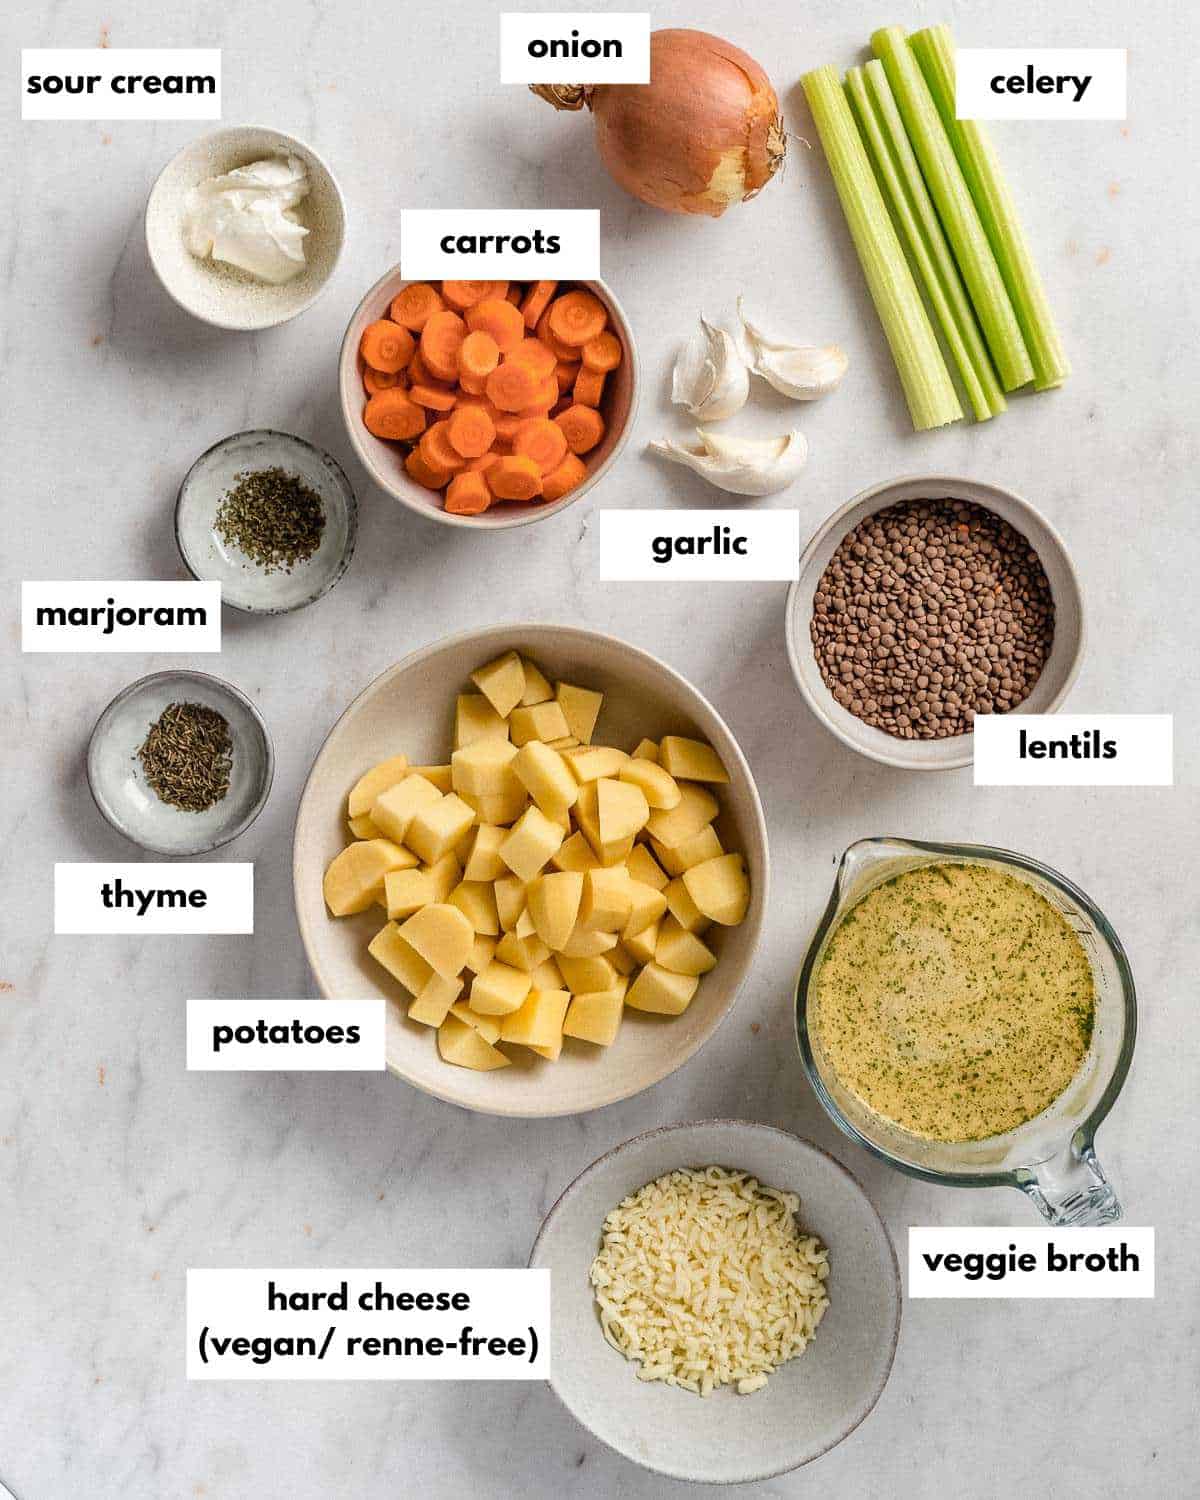 all ingredients needed to make vegetarian lentil soup.